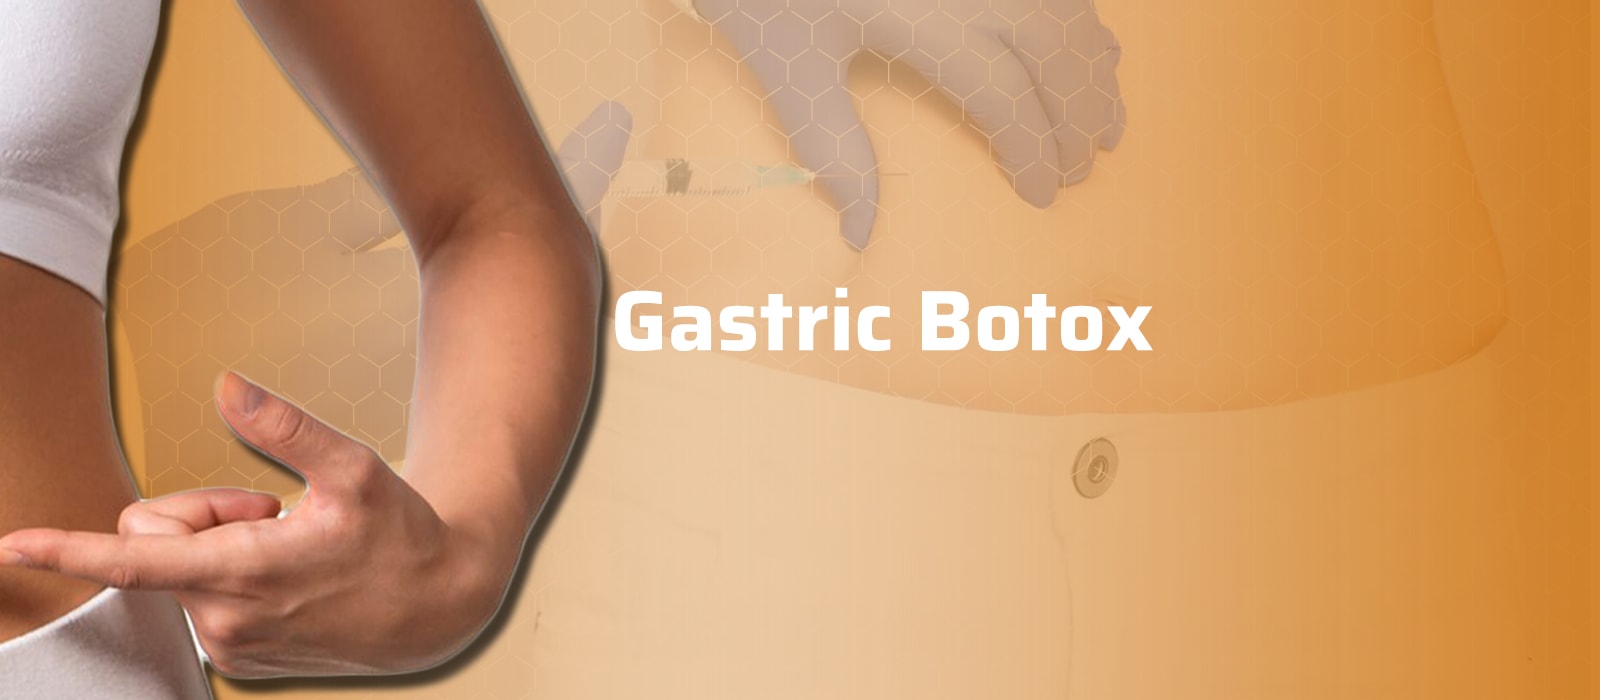 Gastric Botox